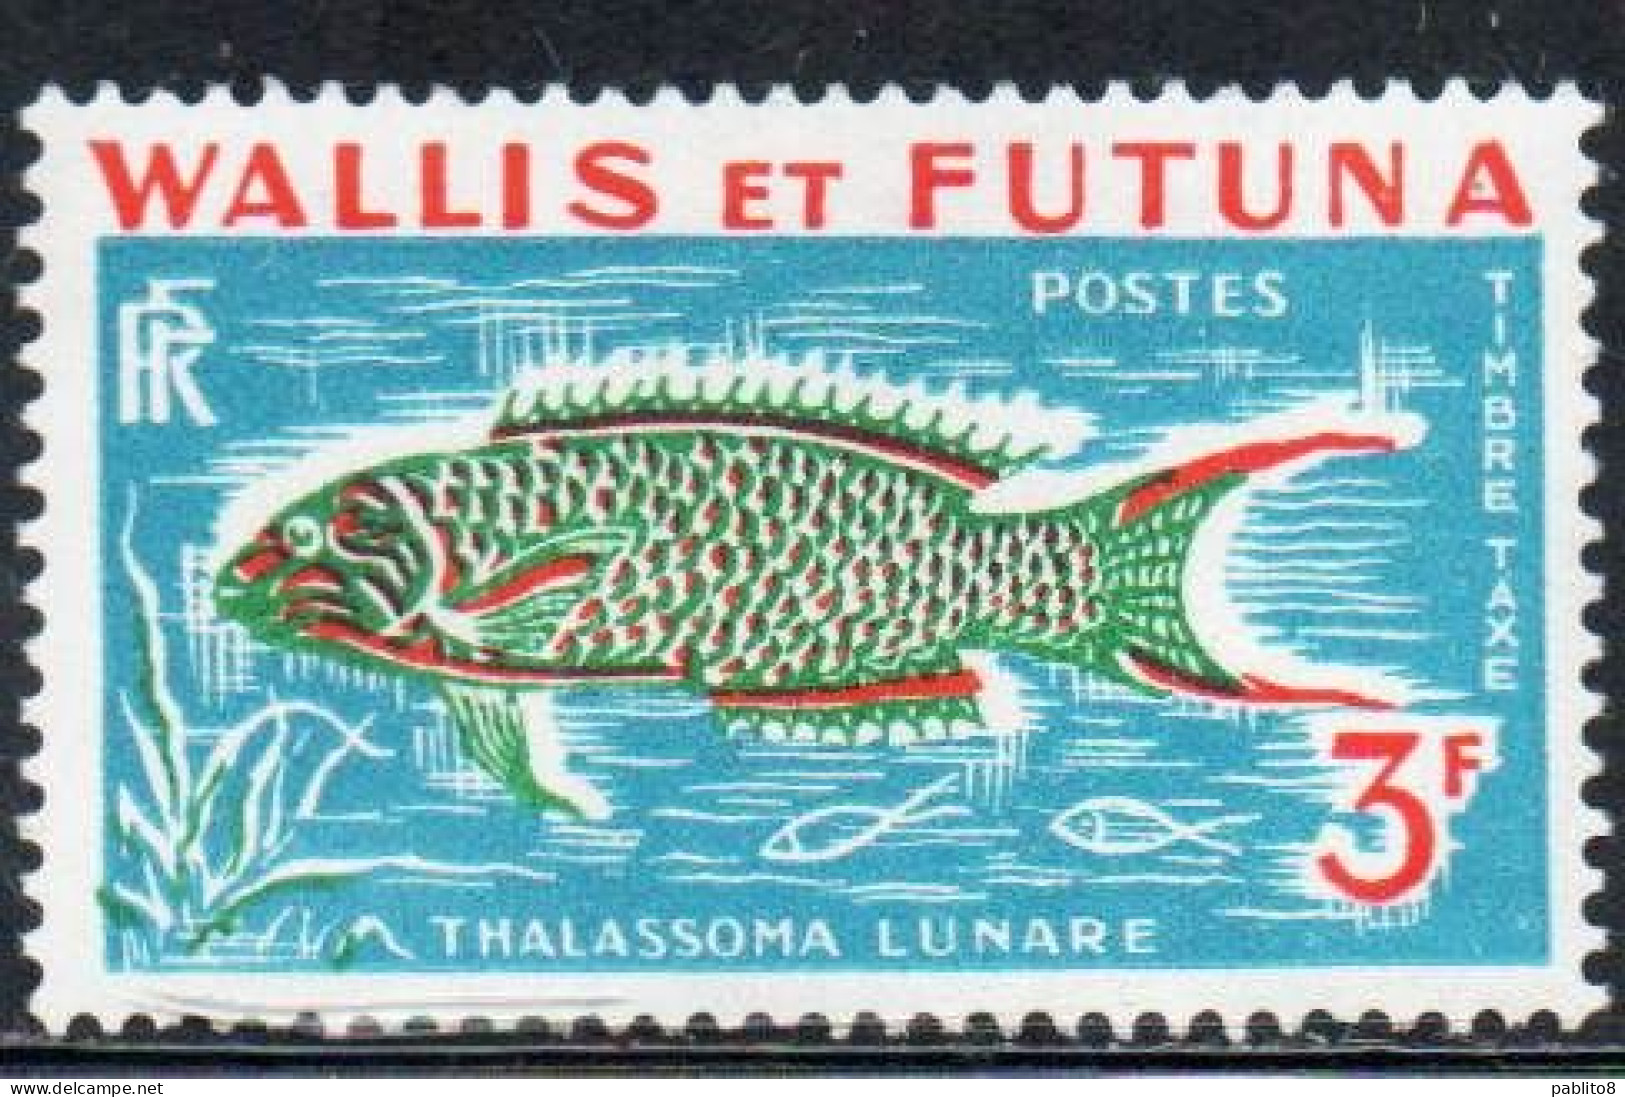 WALLIS AND FUTUNA ISLANDS 1963 POSTAGE DUE STAMPS TAXE SEGNATASSE THALASSOMA LUNARE 3fr MH - Portomarken